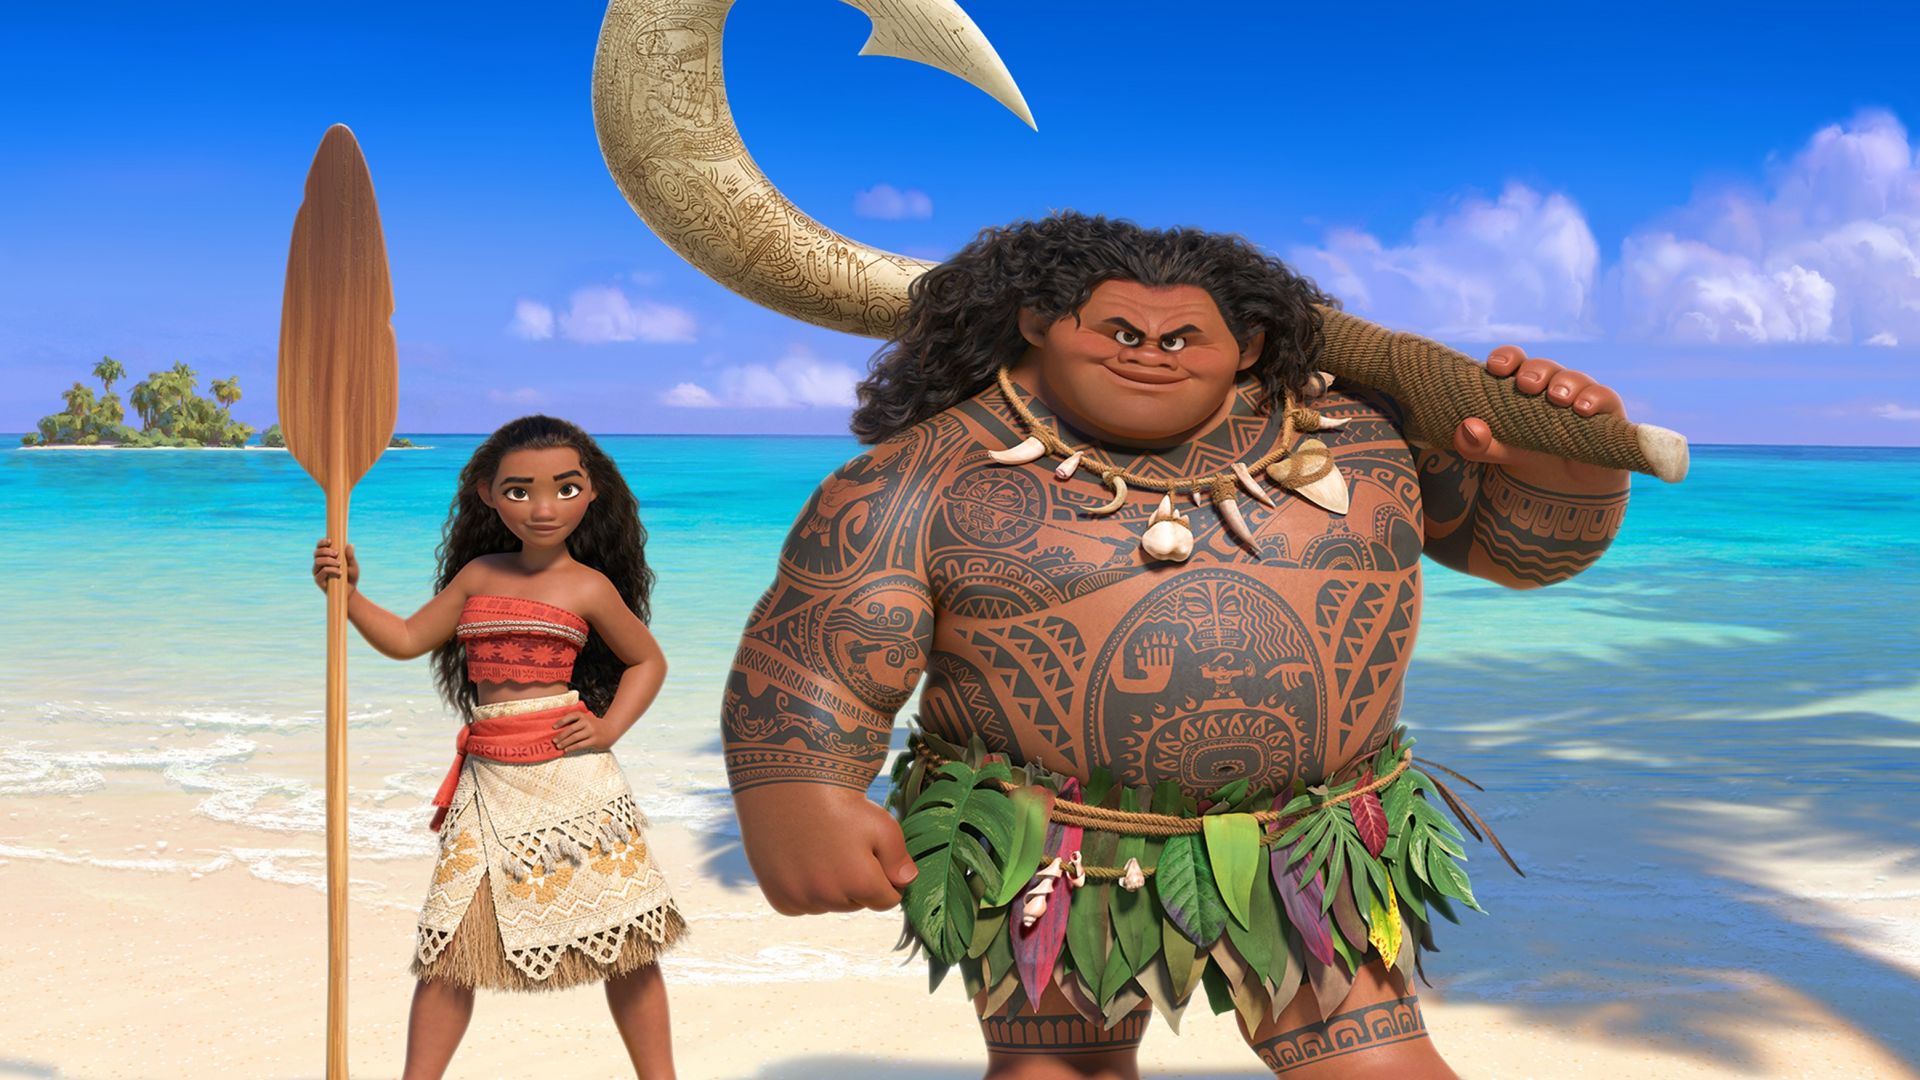 Моана, Мауи, лучшие мультфильмы 2016, Moana, Maui, best animation movies of 2016 (horizontal)